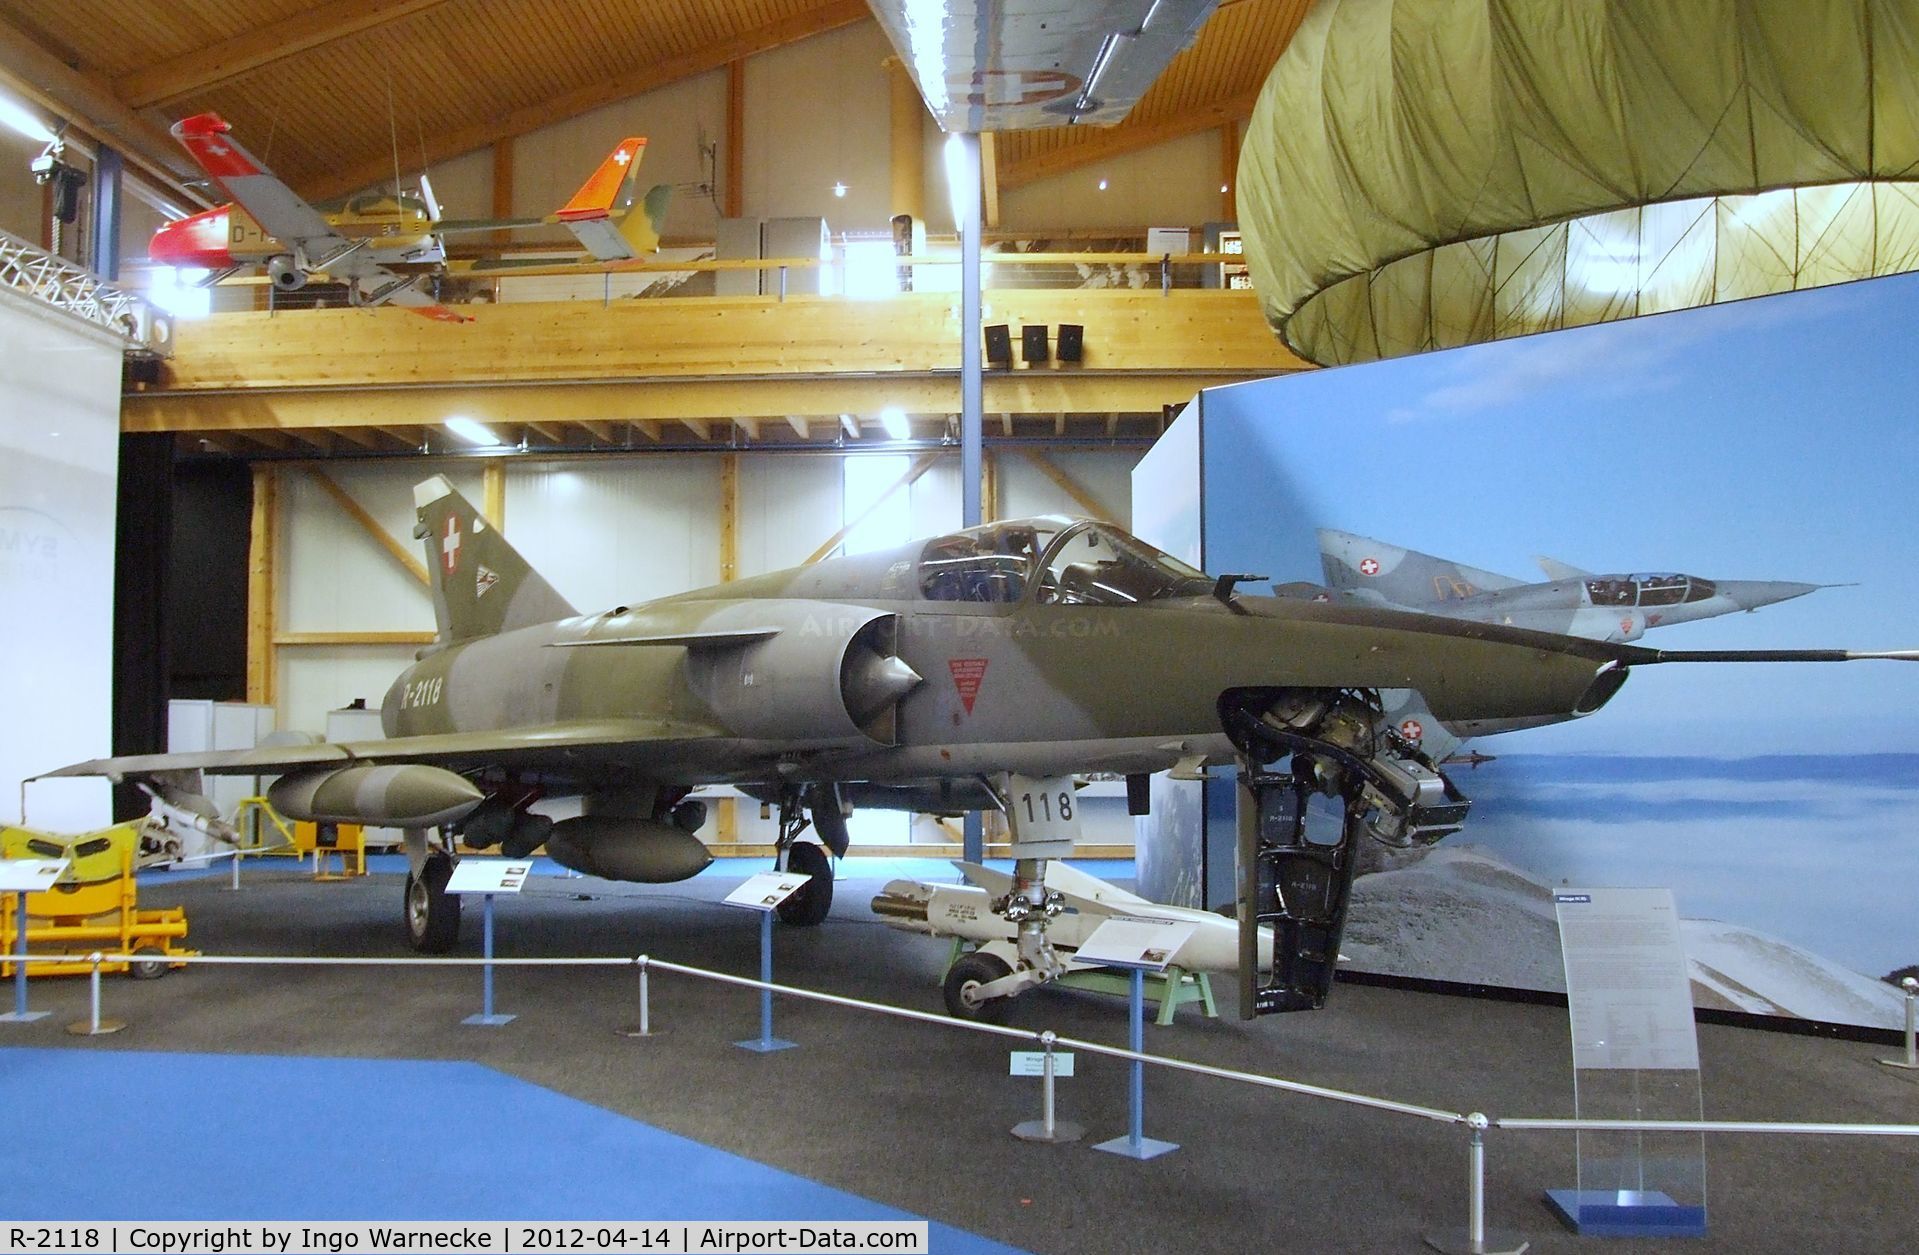 R-2118, Dassault Mirage IIIRS C/N 17-26-150/1038, Dassault Mirage III RS at the Flieger-Flab-Museum, Dübendorf